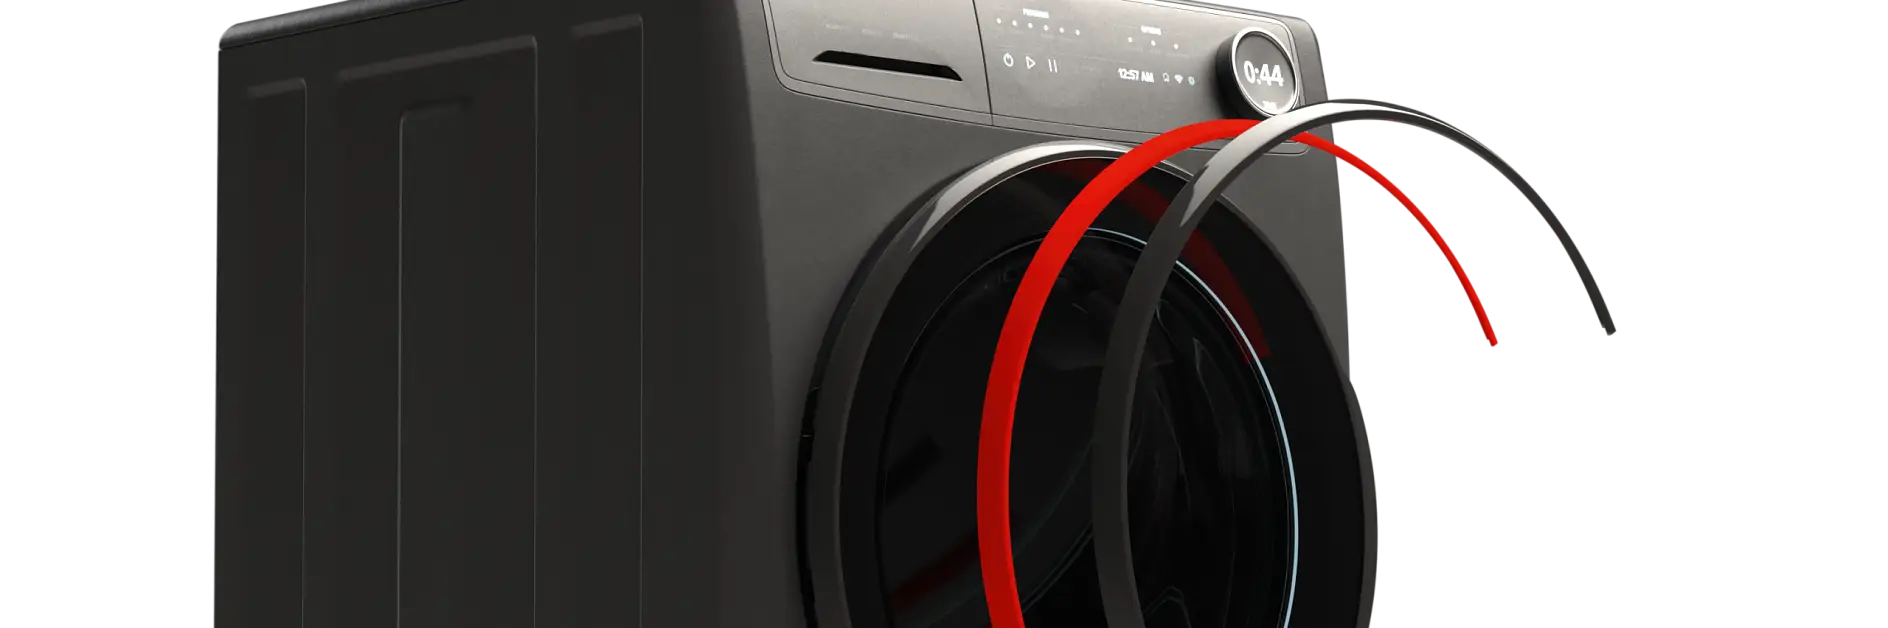 Appliances washing machine decorative trim mounting illustration